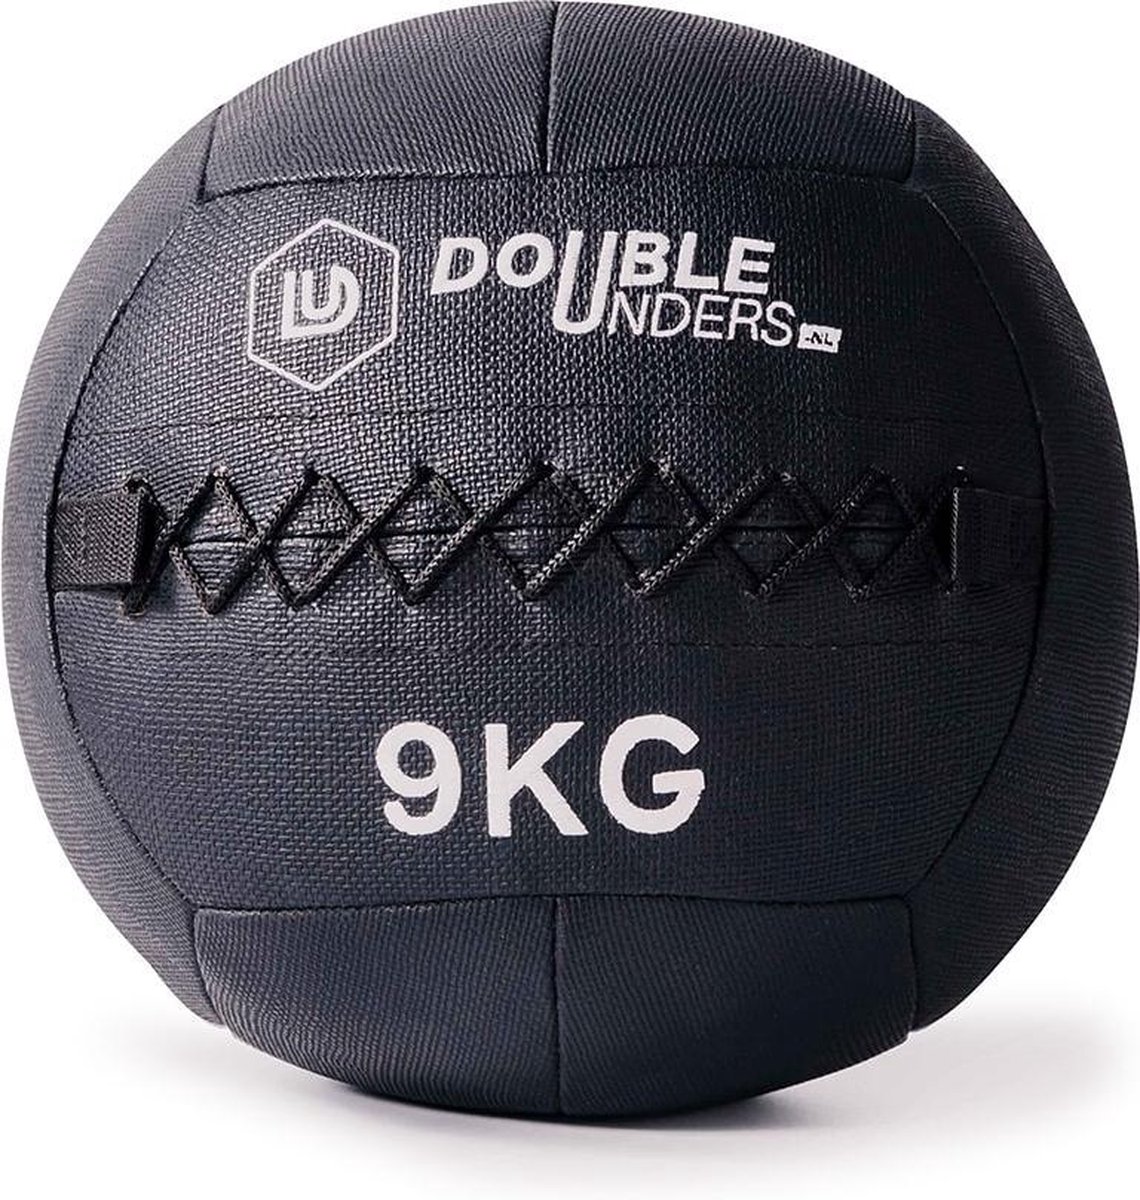 DoubleUnders - Wall ball 9kg zwart - Professionele wall ball voor Crossfit